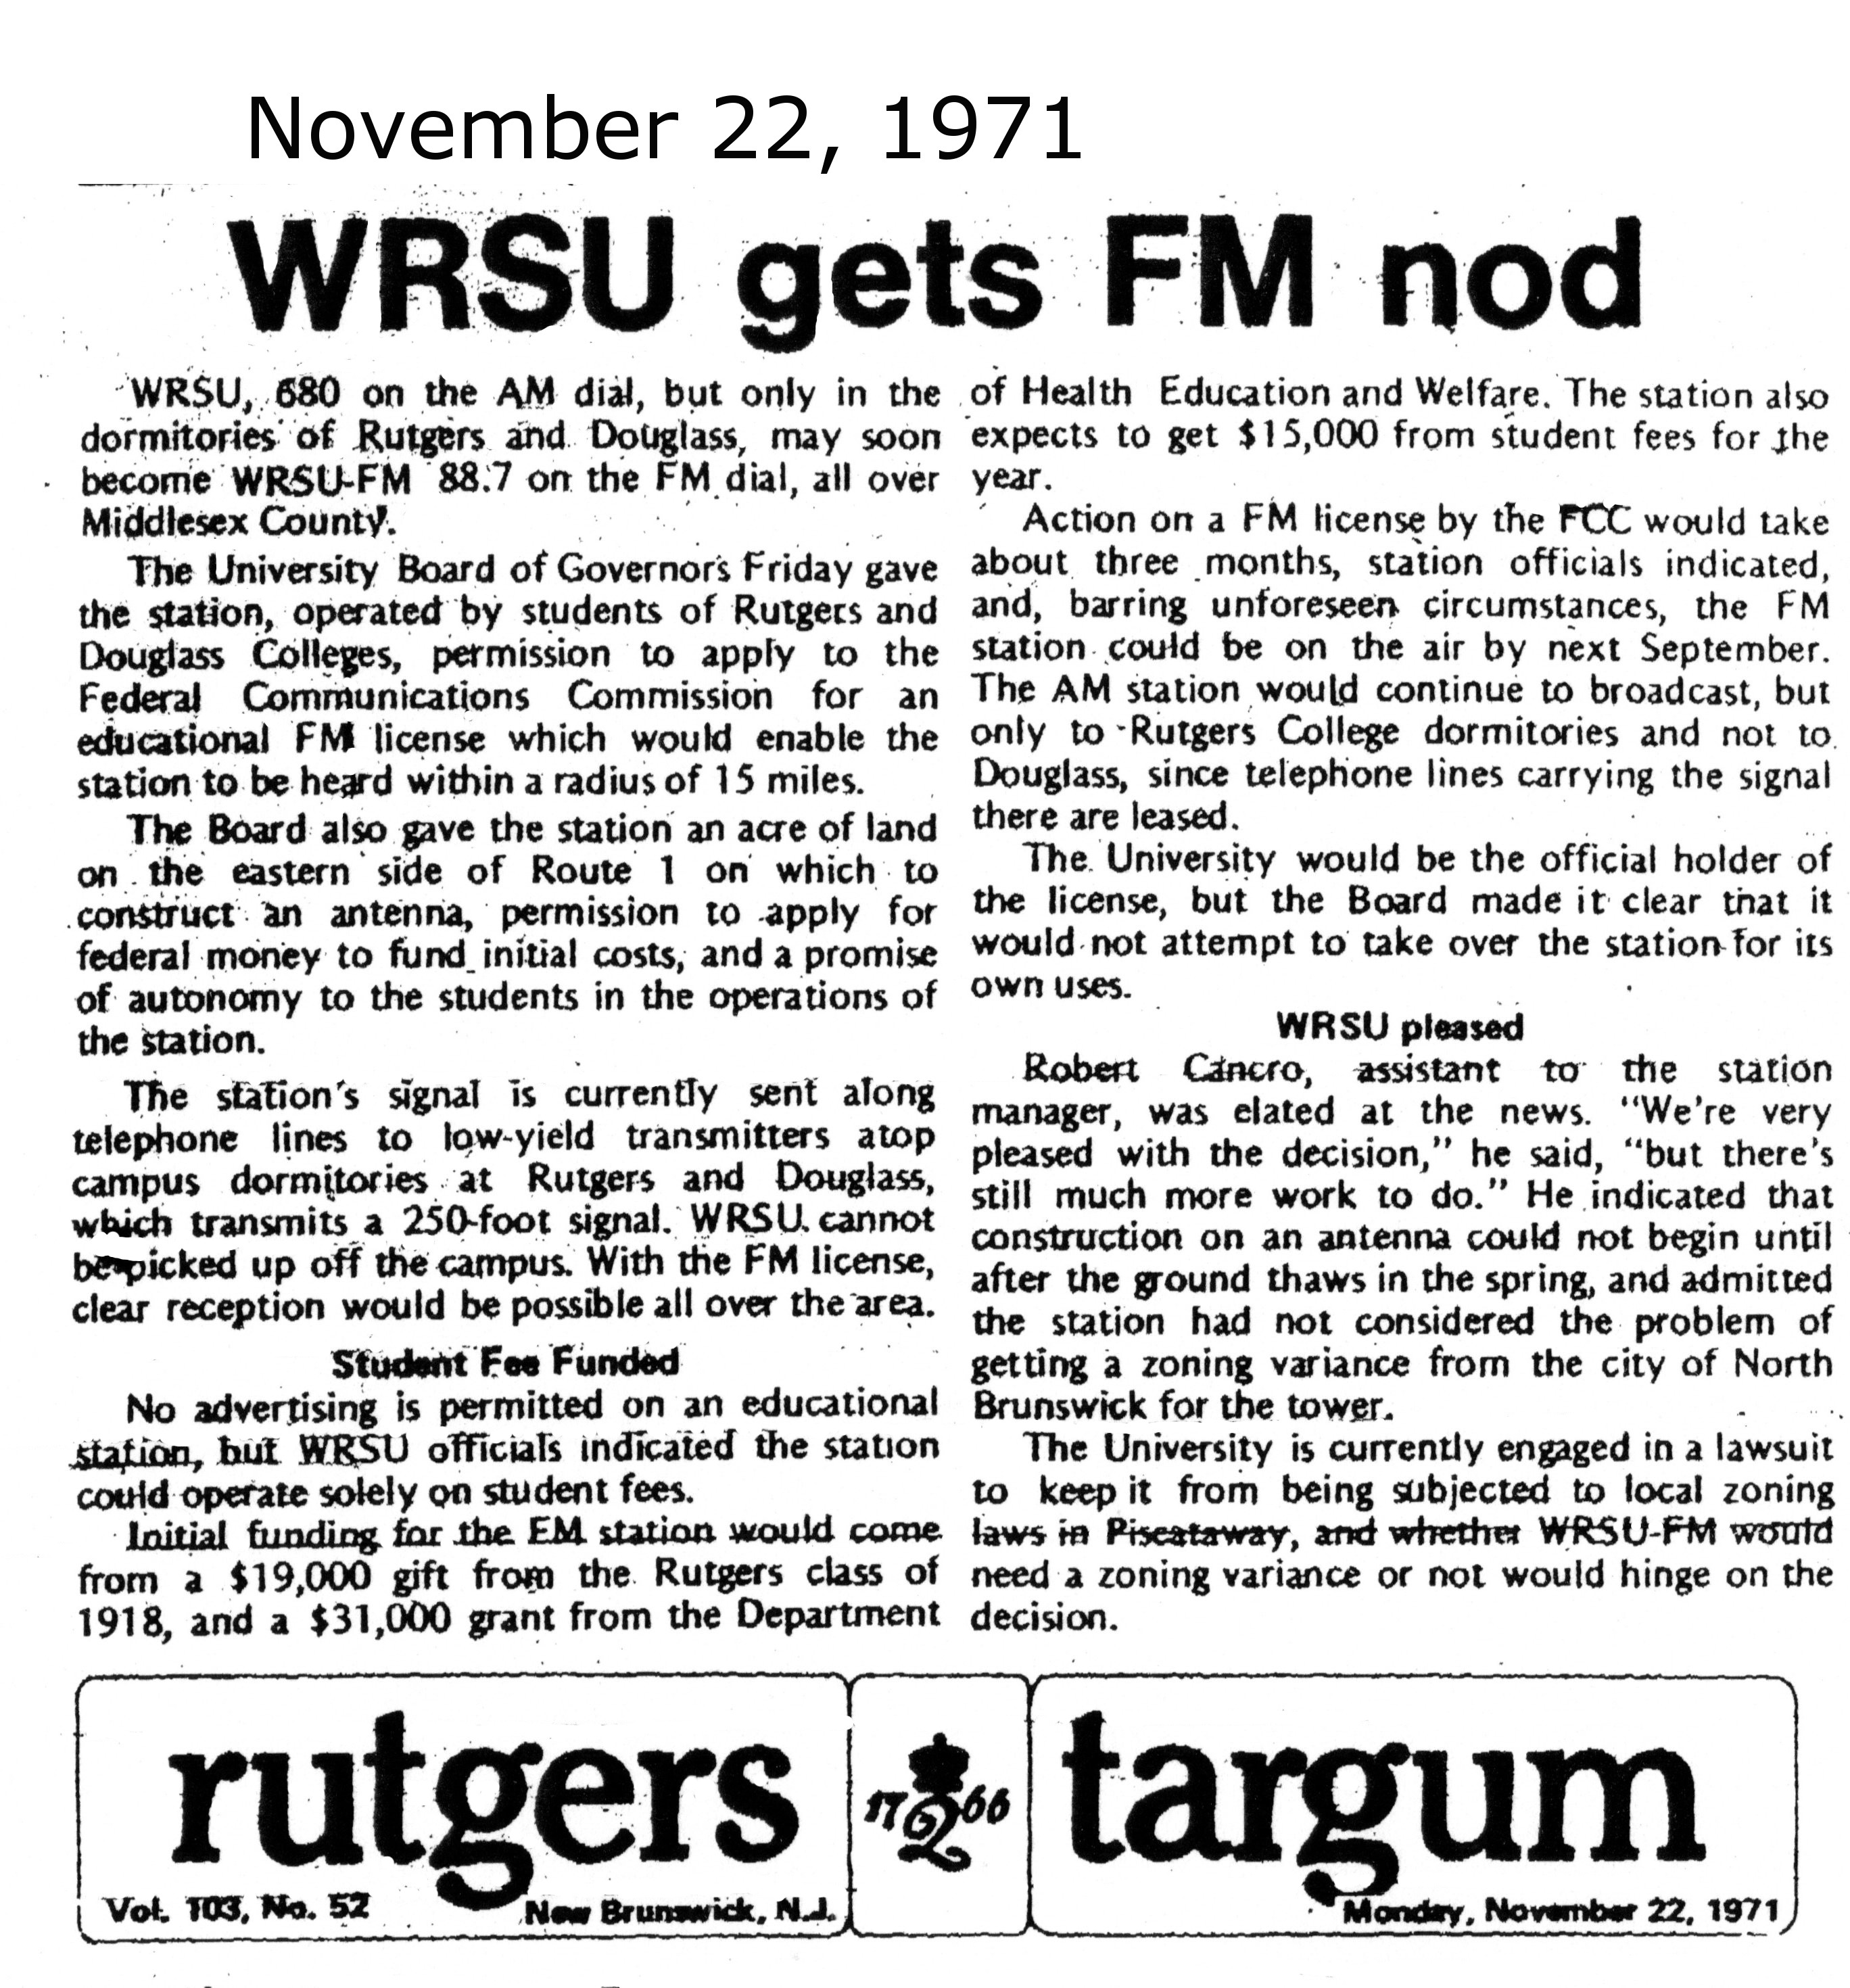 1971 - WRSU FM gets approval